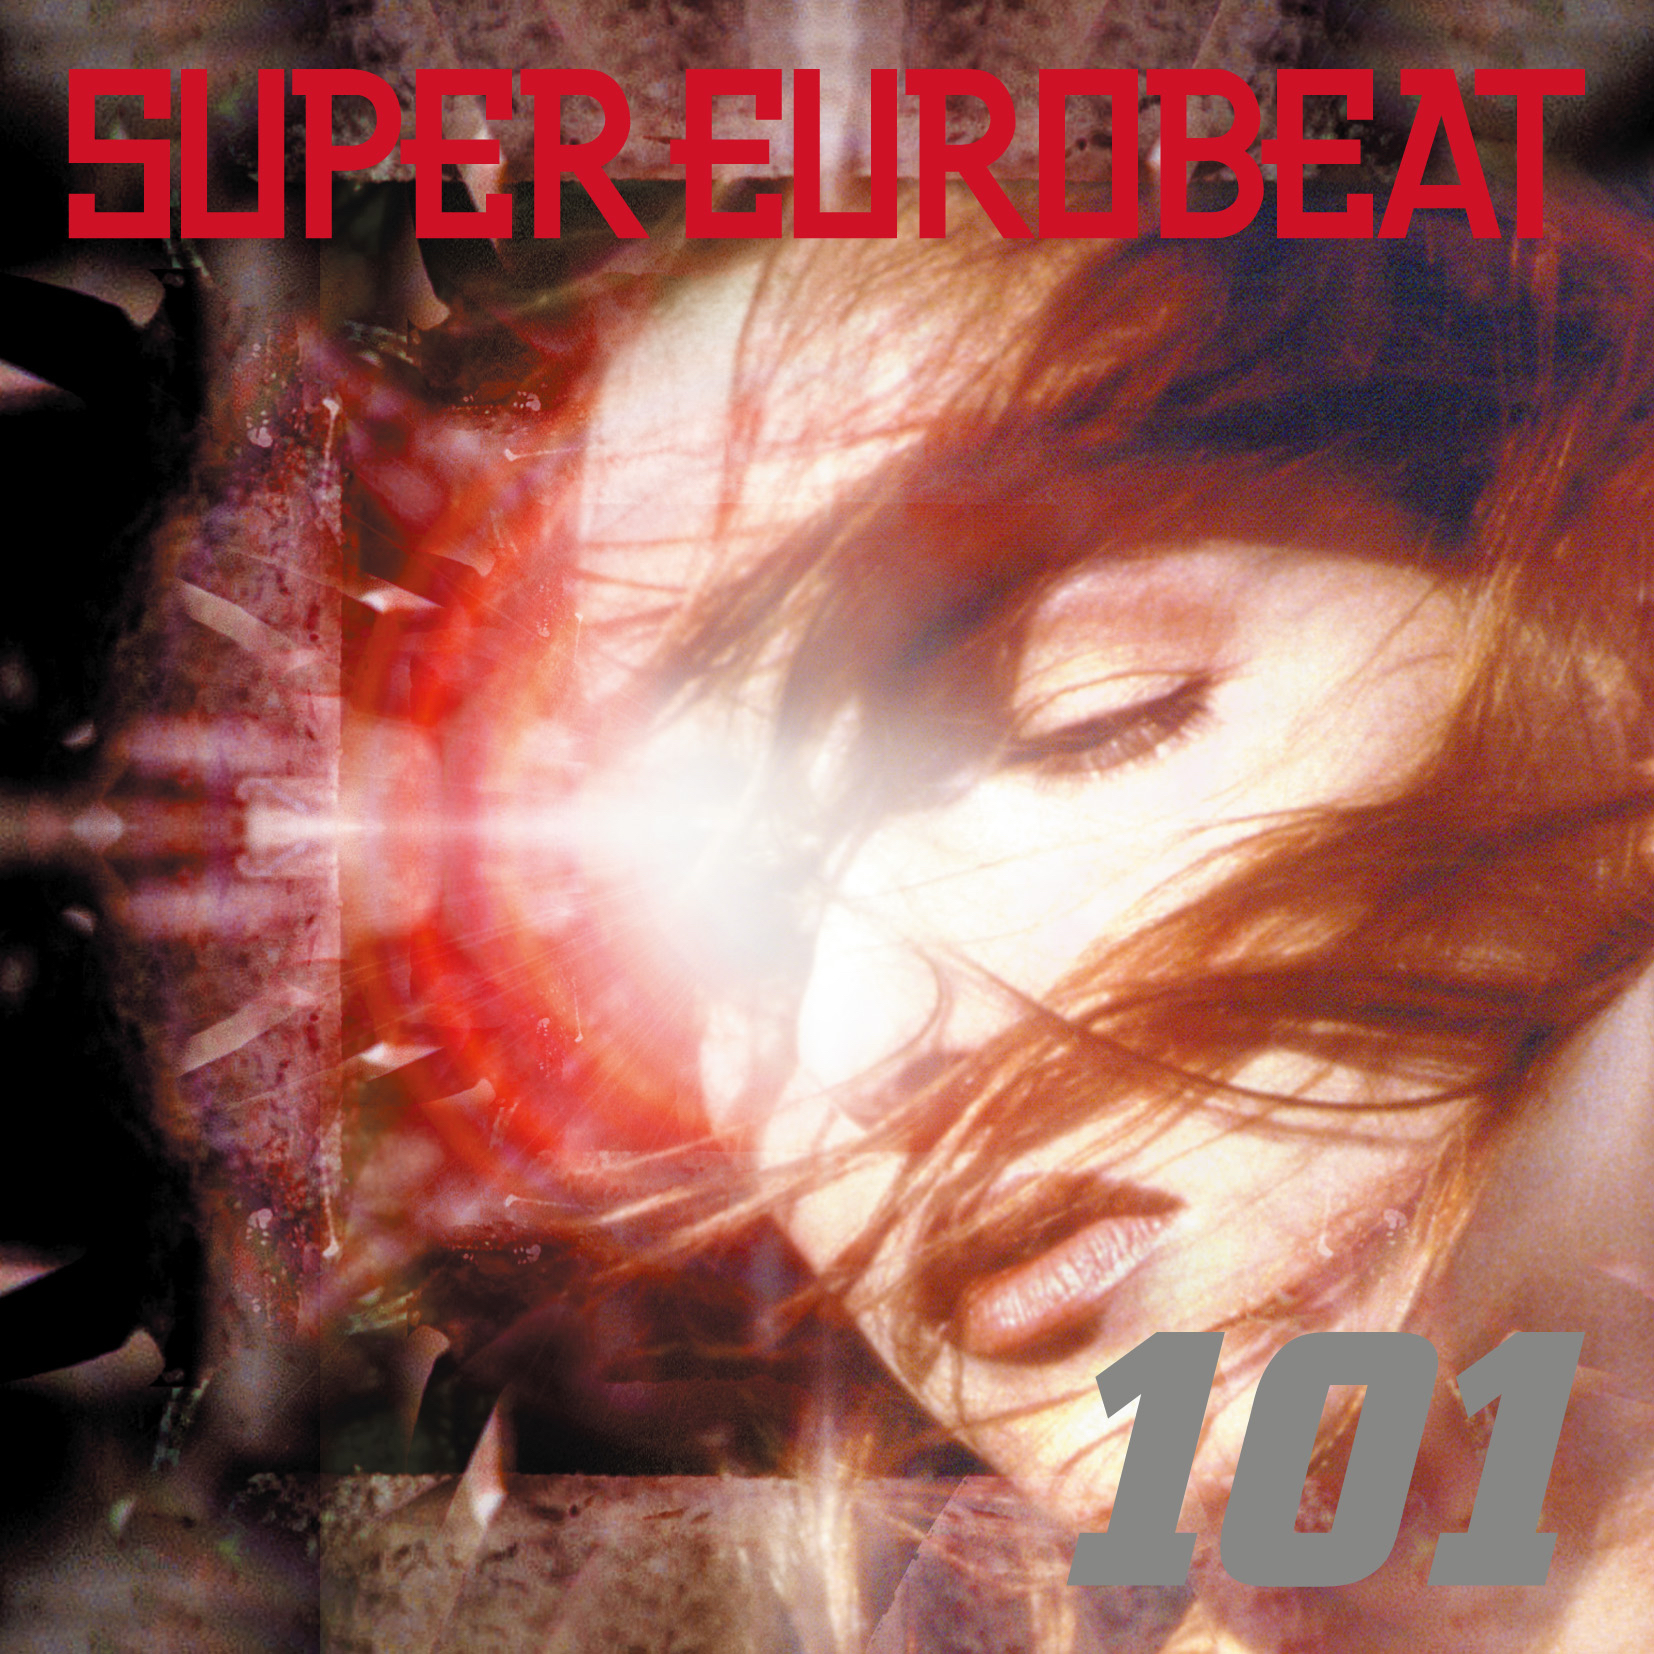 Super Eurobeat Vol. 101 | Eurobeat Wiki | Fandom